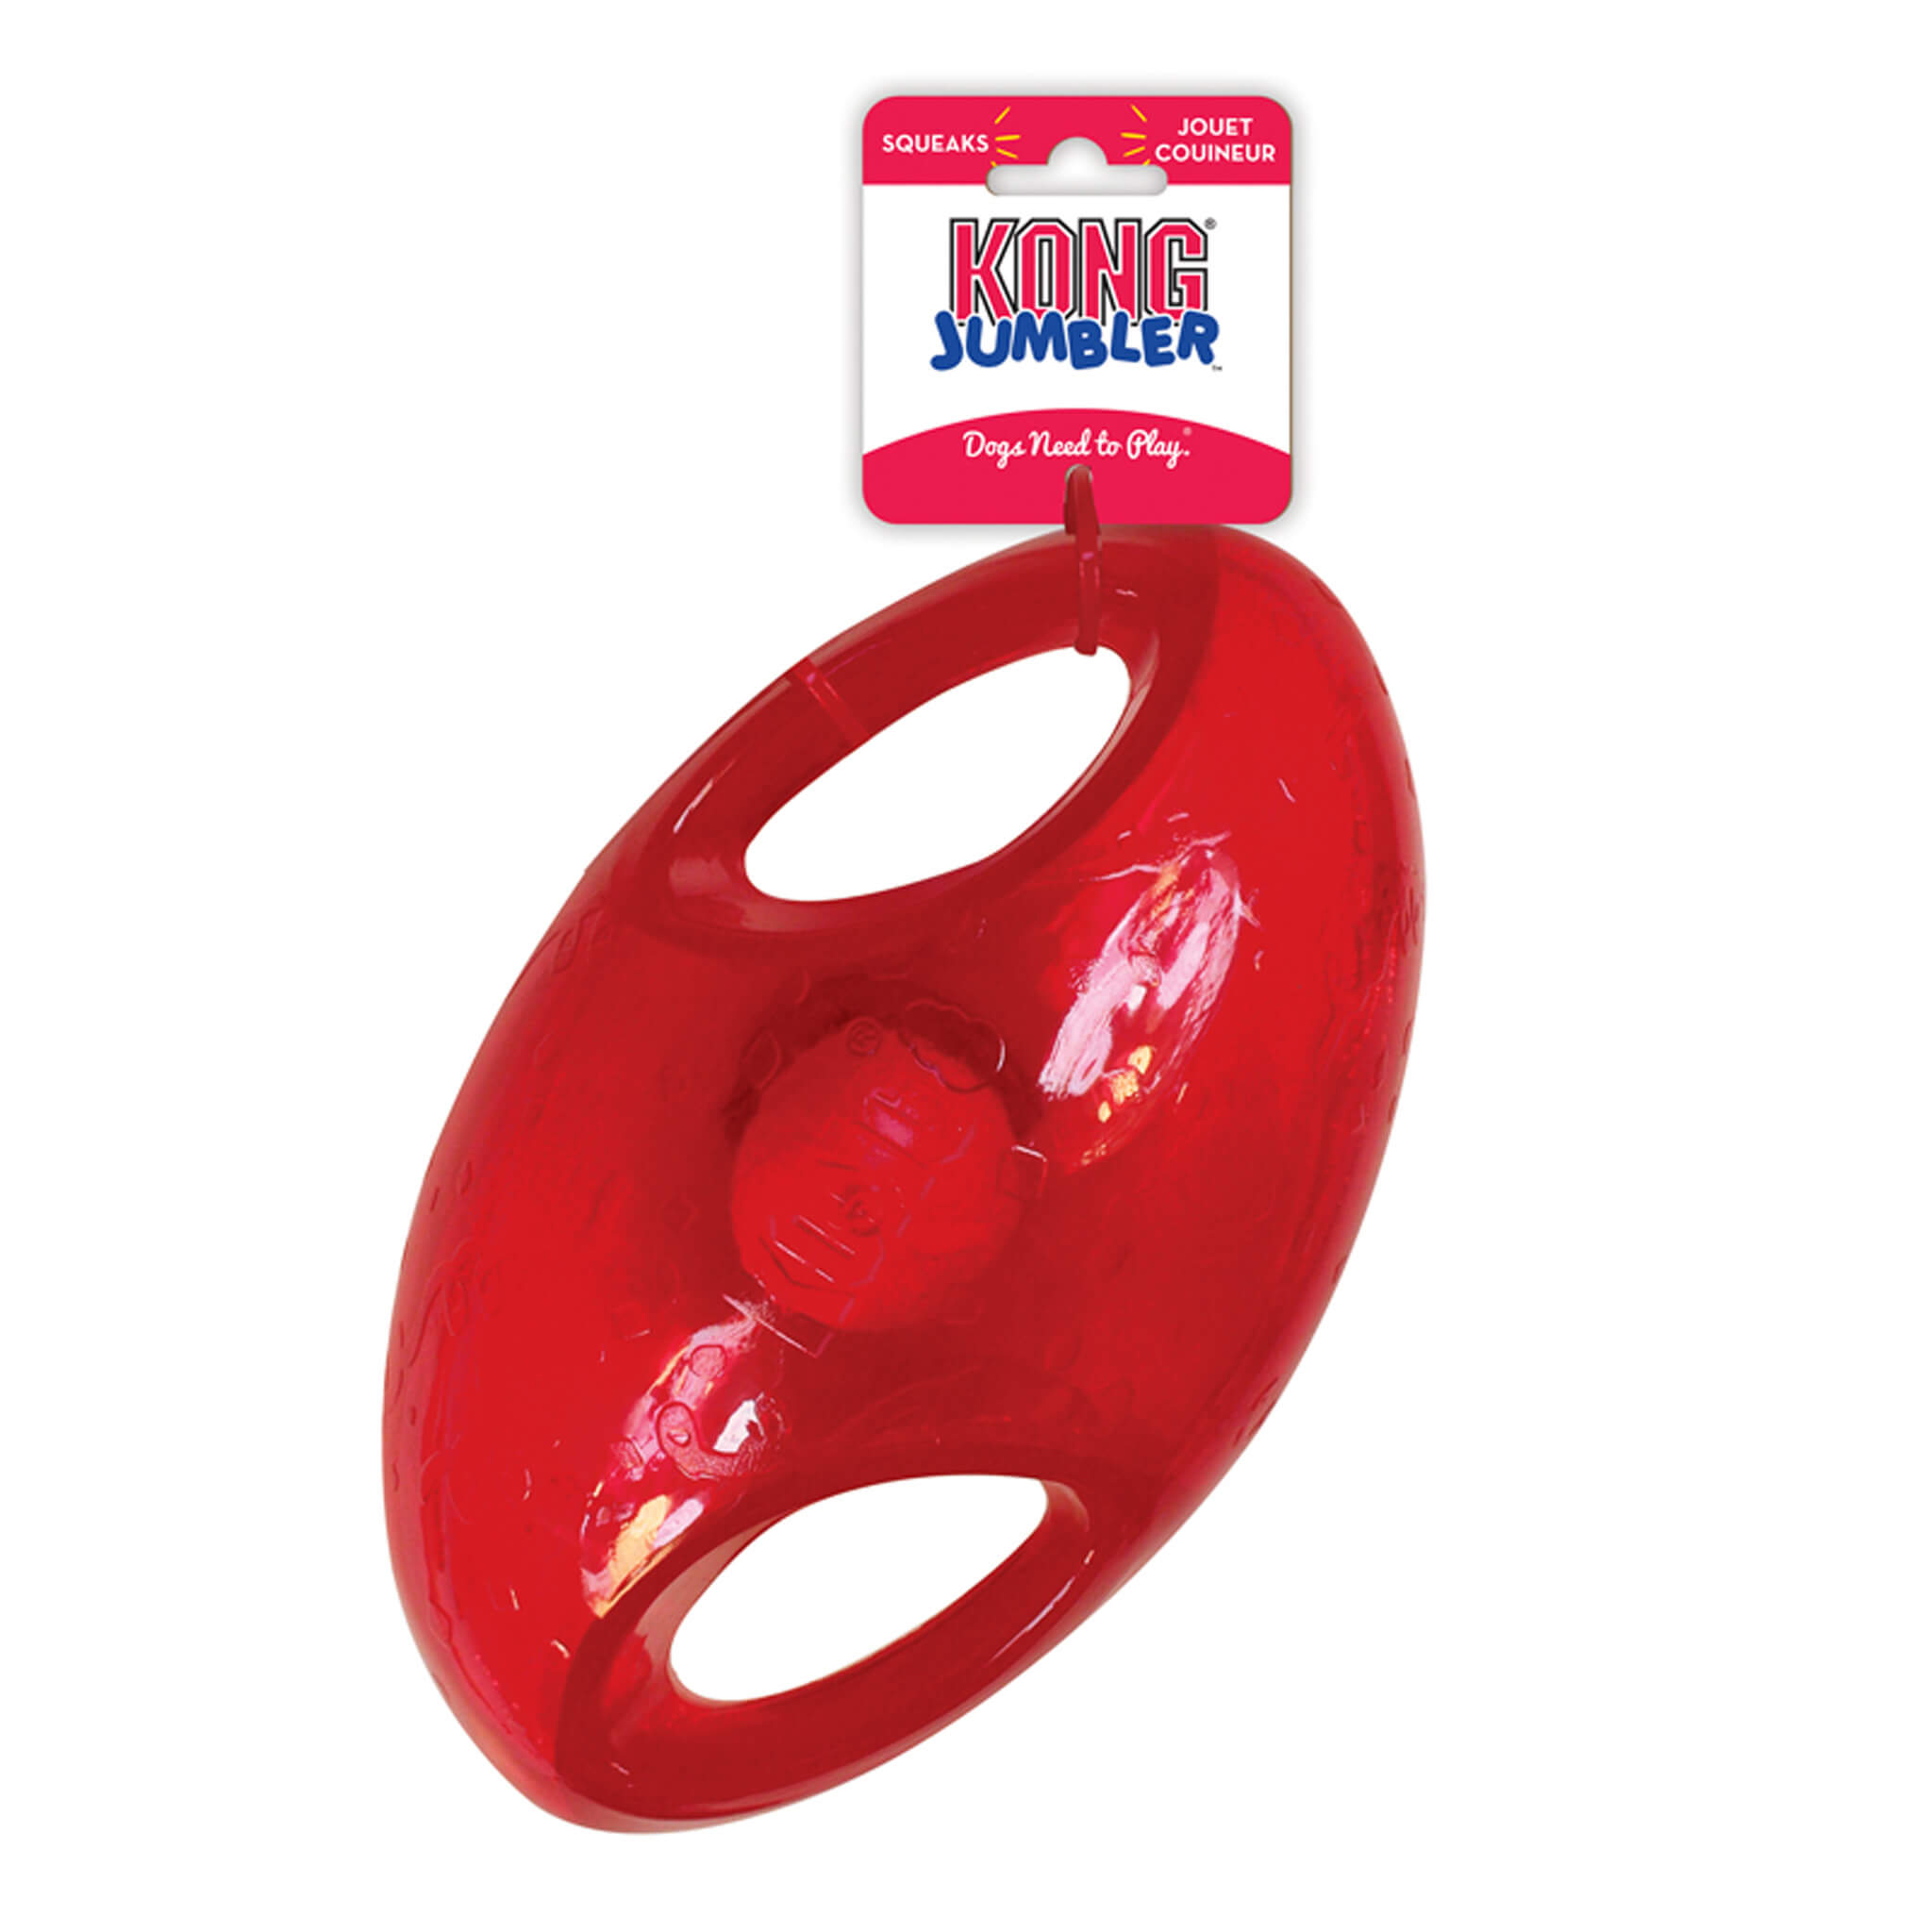 Kong dog toy - jumbler football assorted (red)